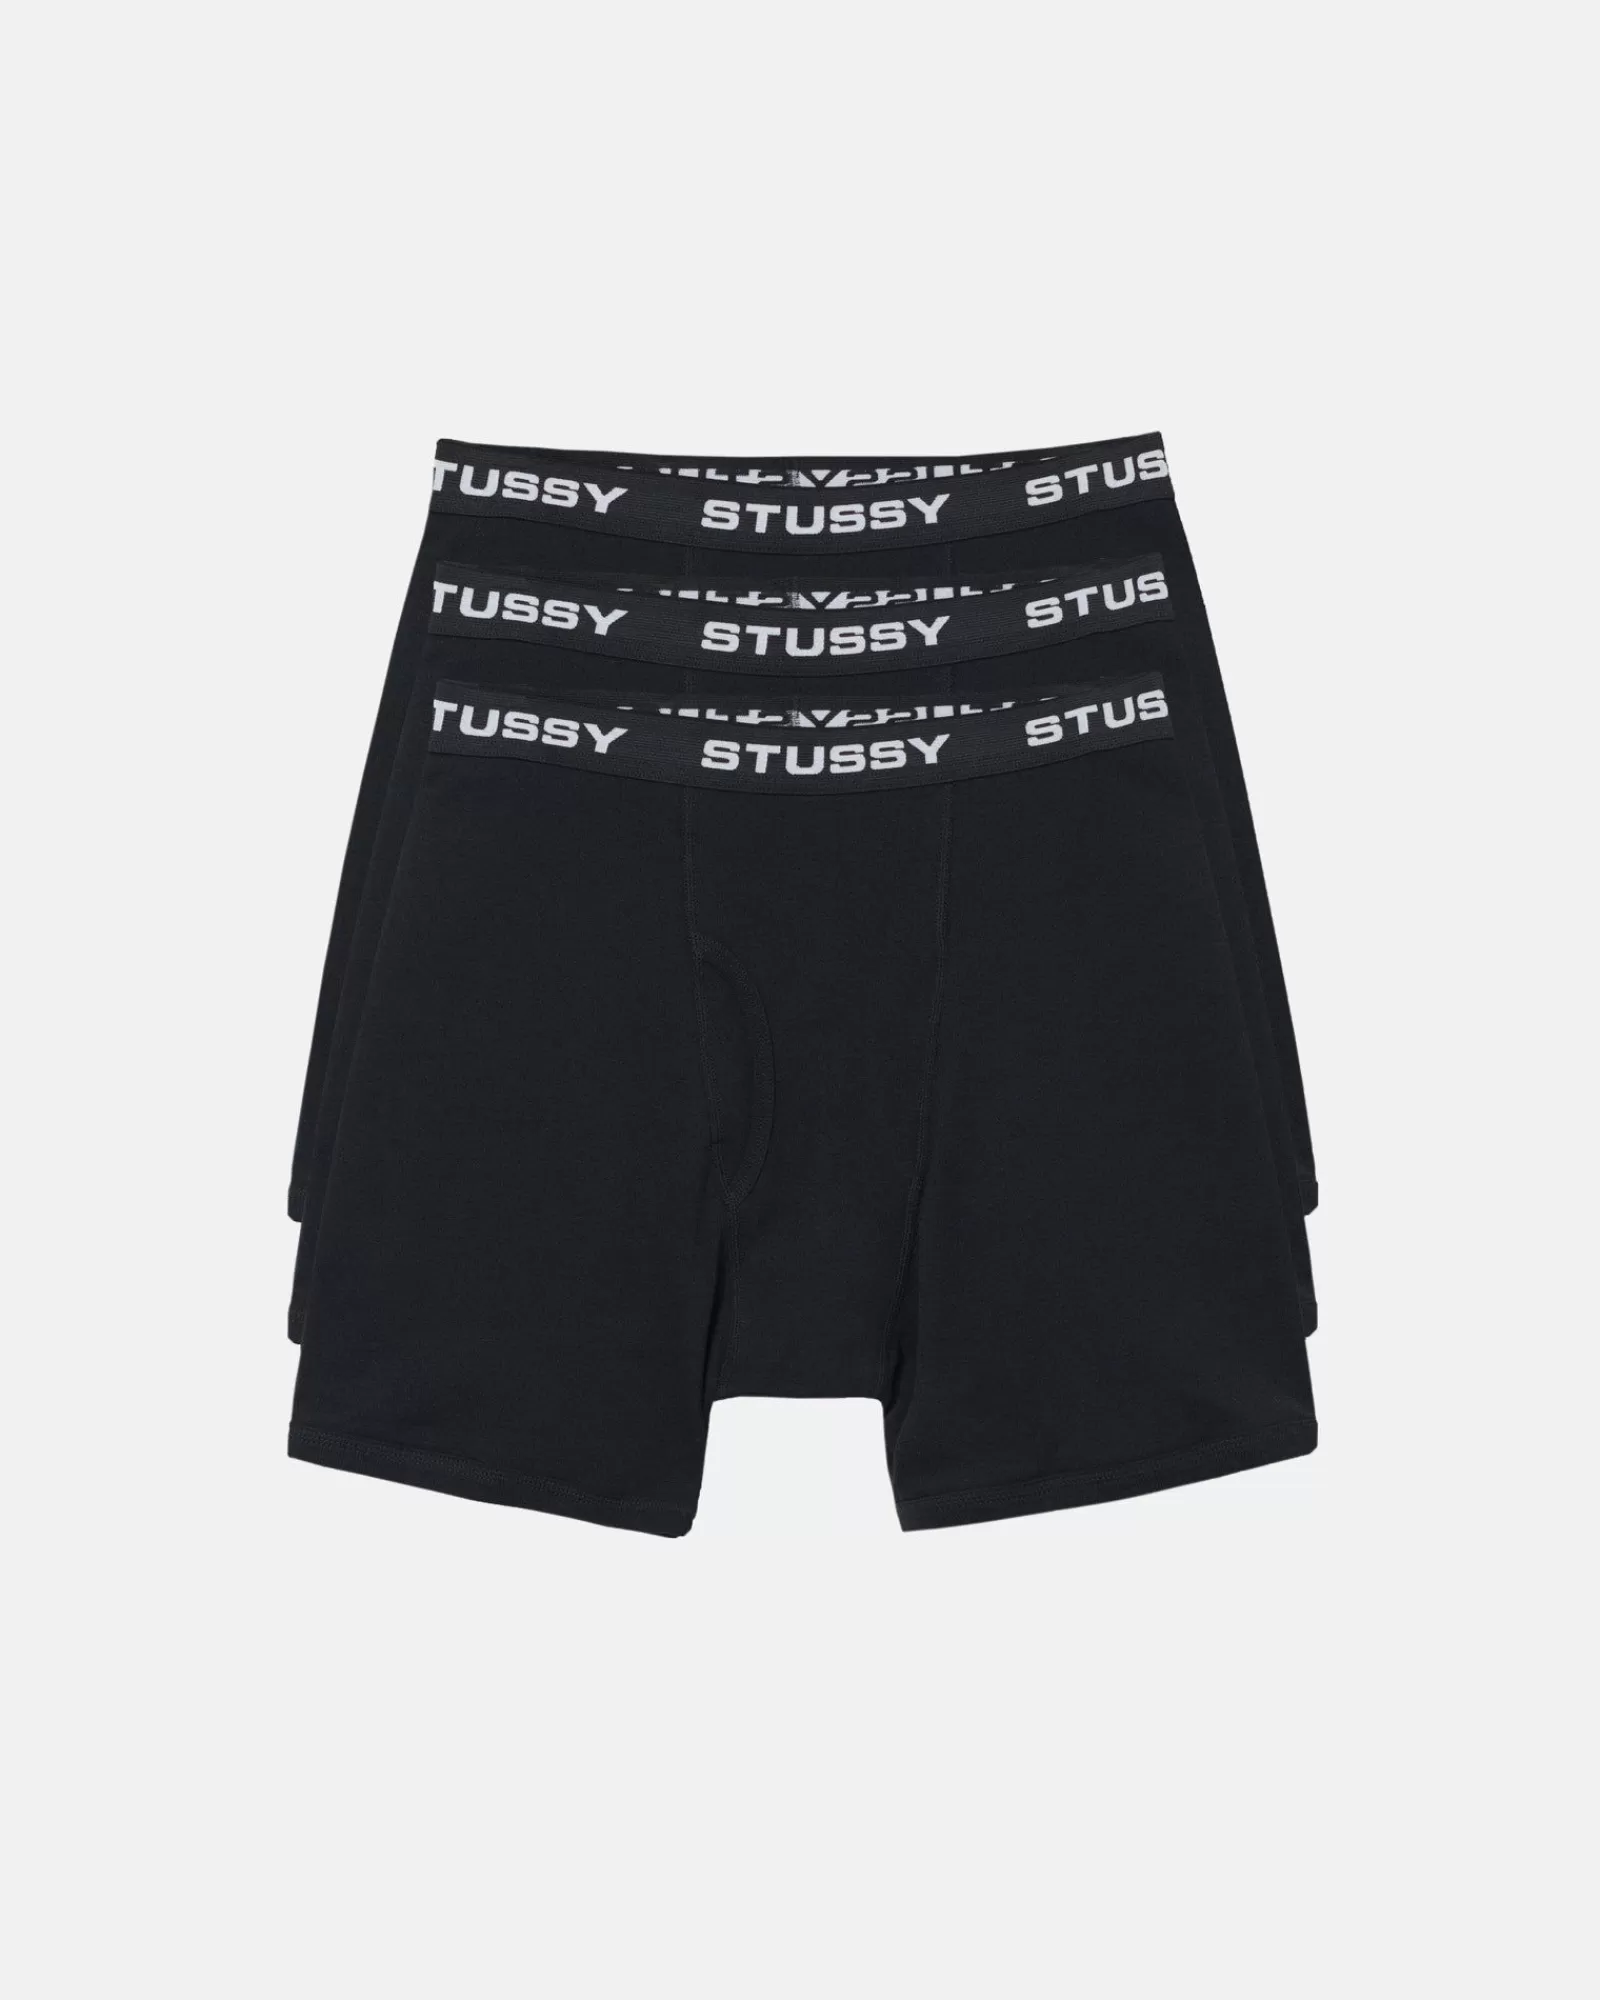 Stüssy Stussy Boxer Briefs Multipack Online